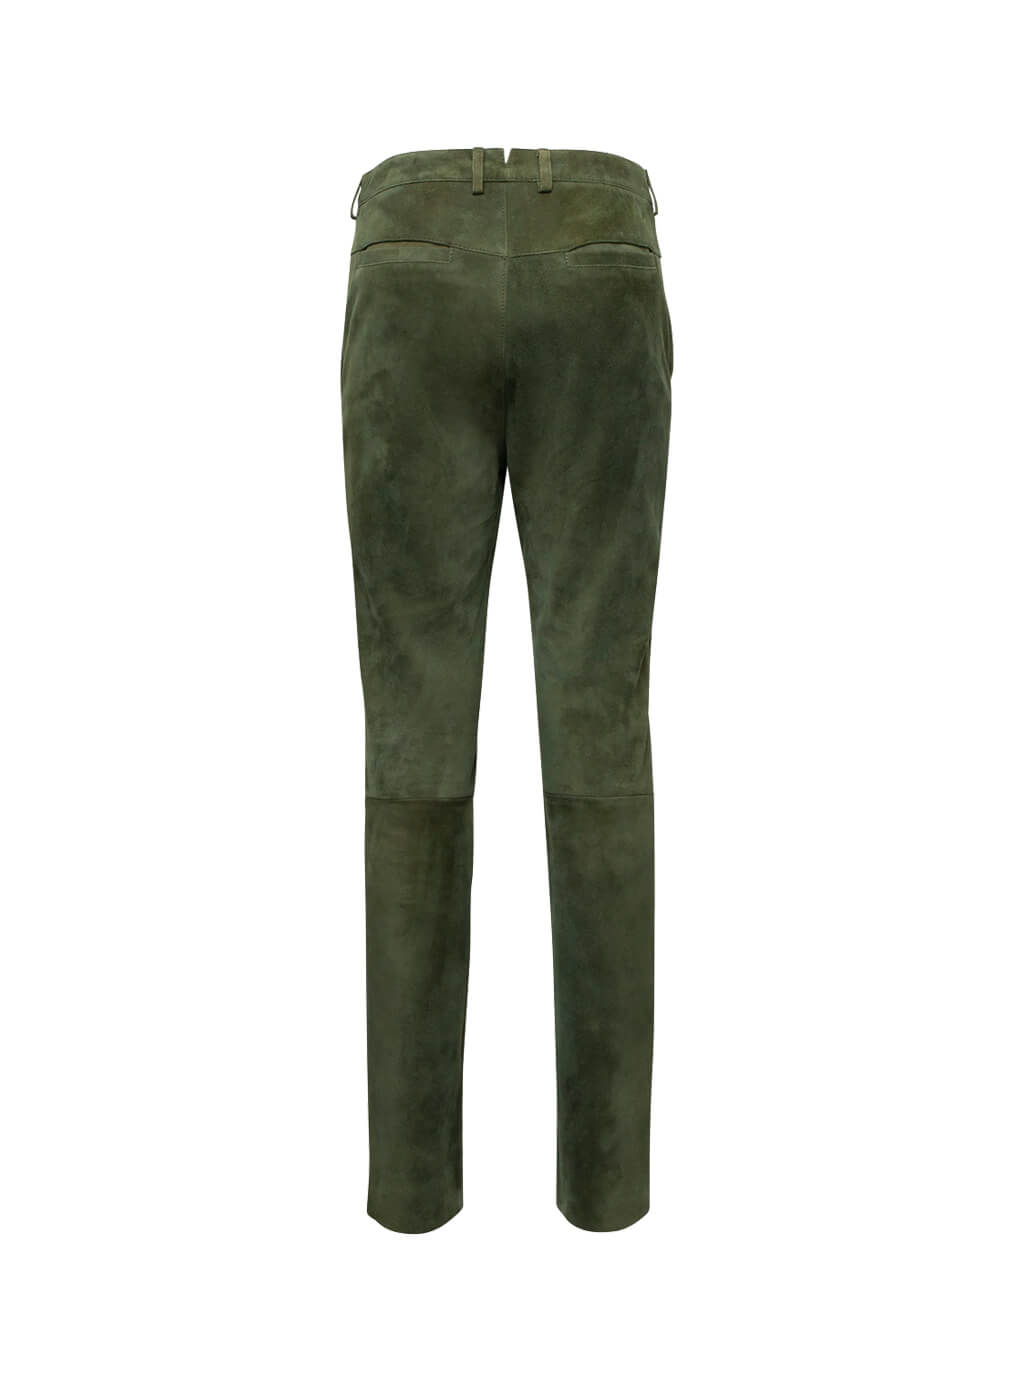 Goat Leather Trousers “Jessie”, irish green